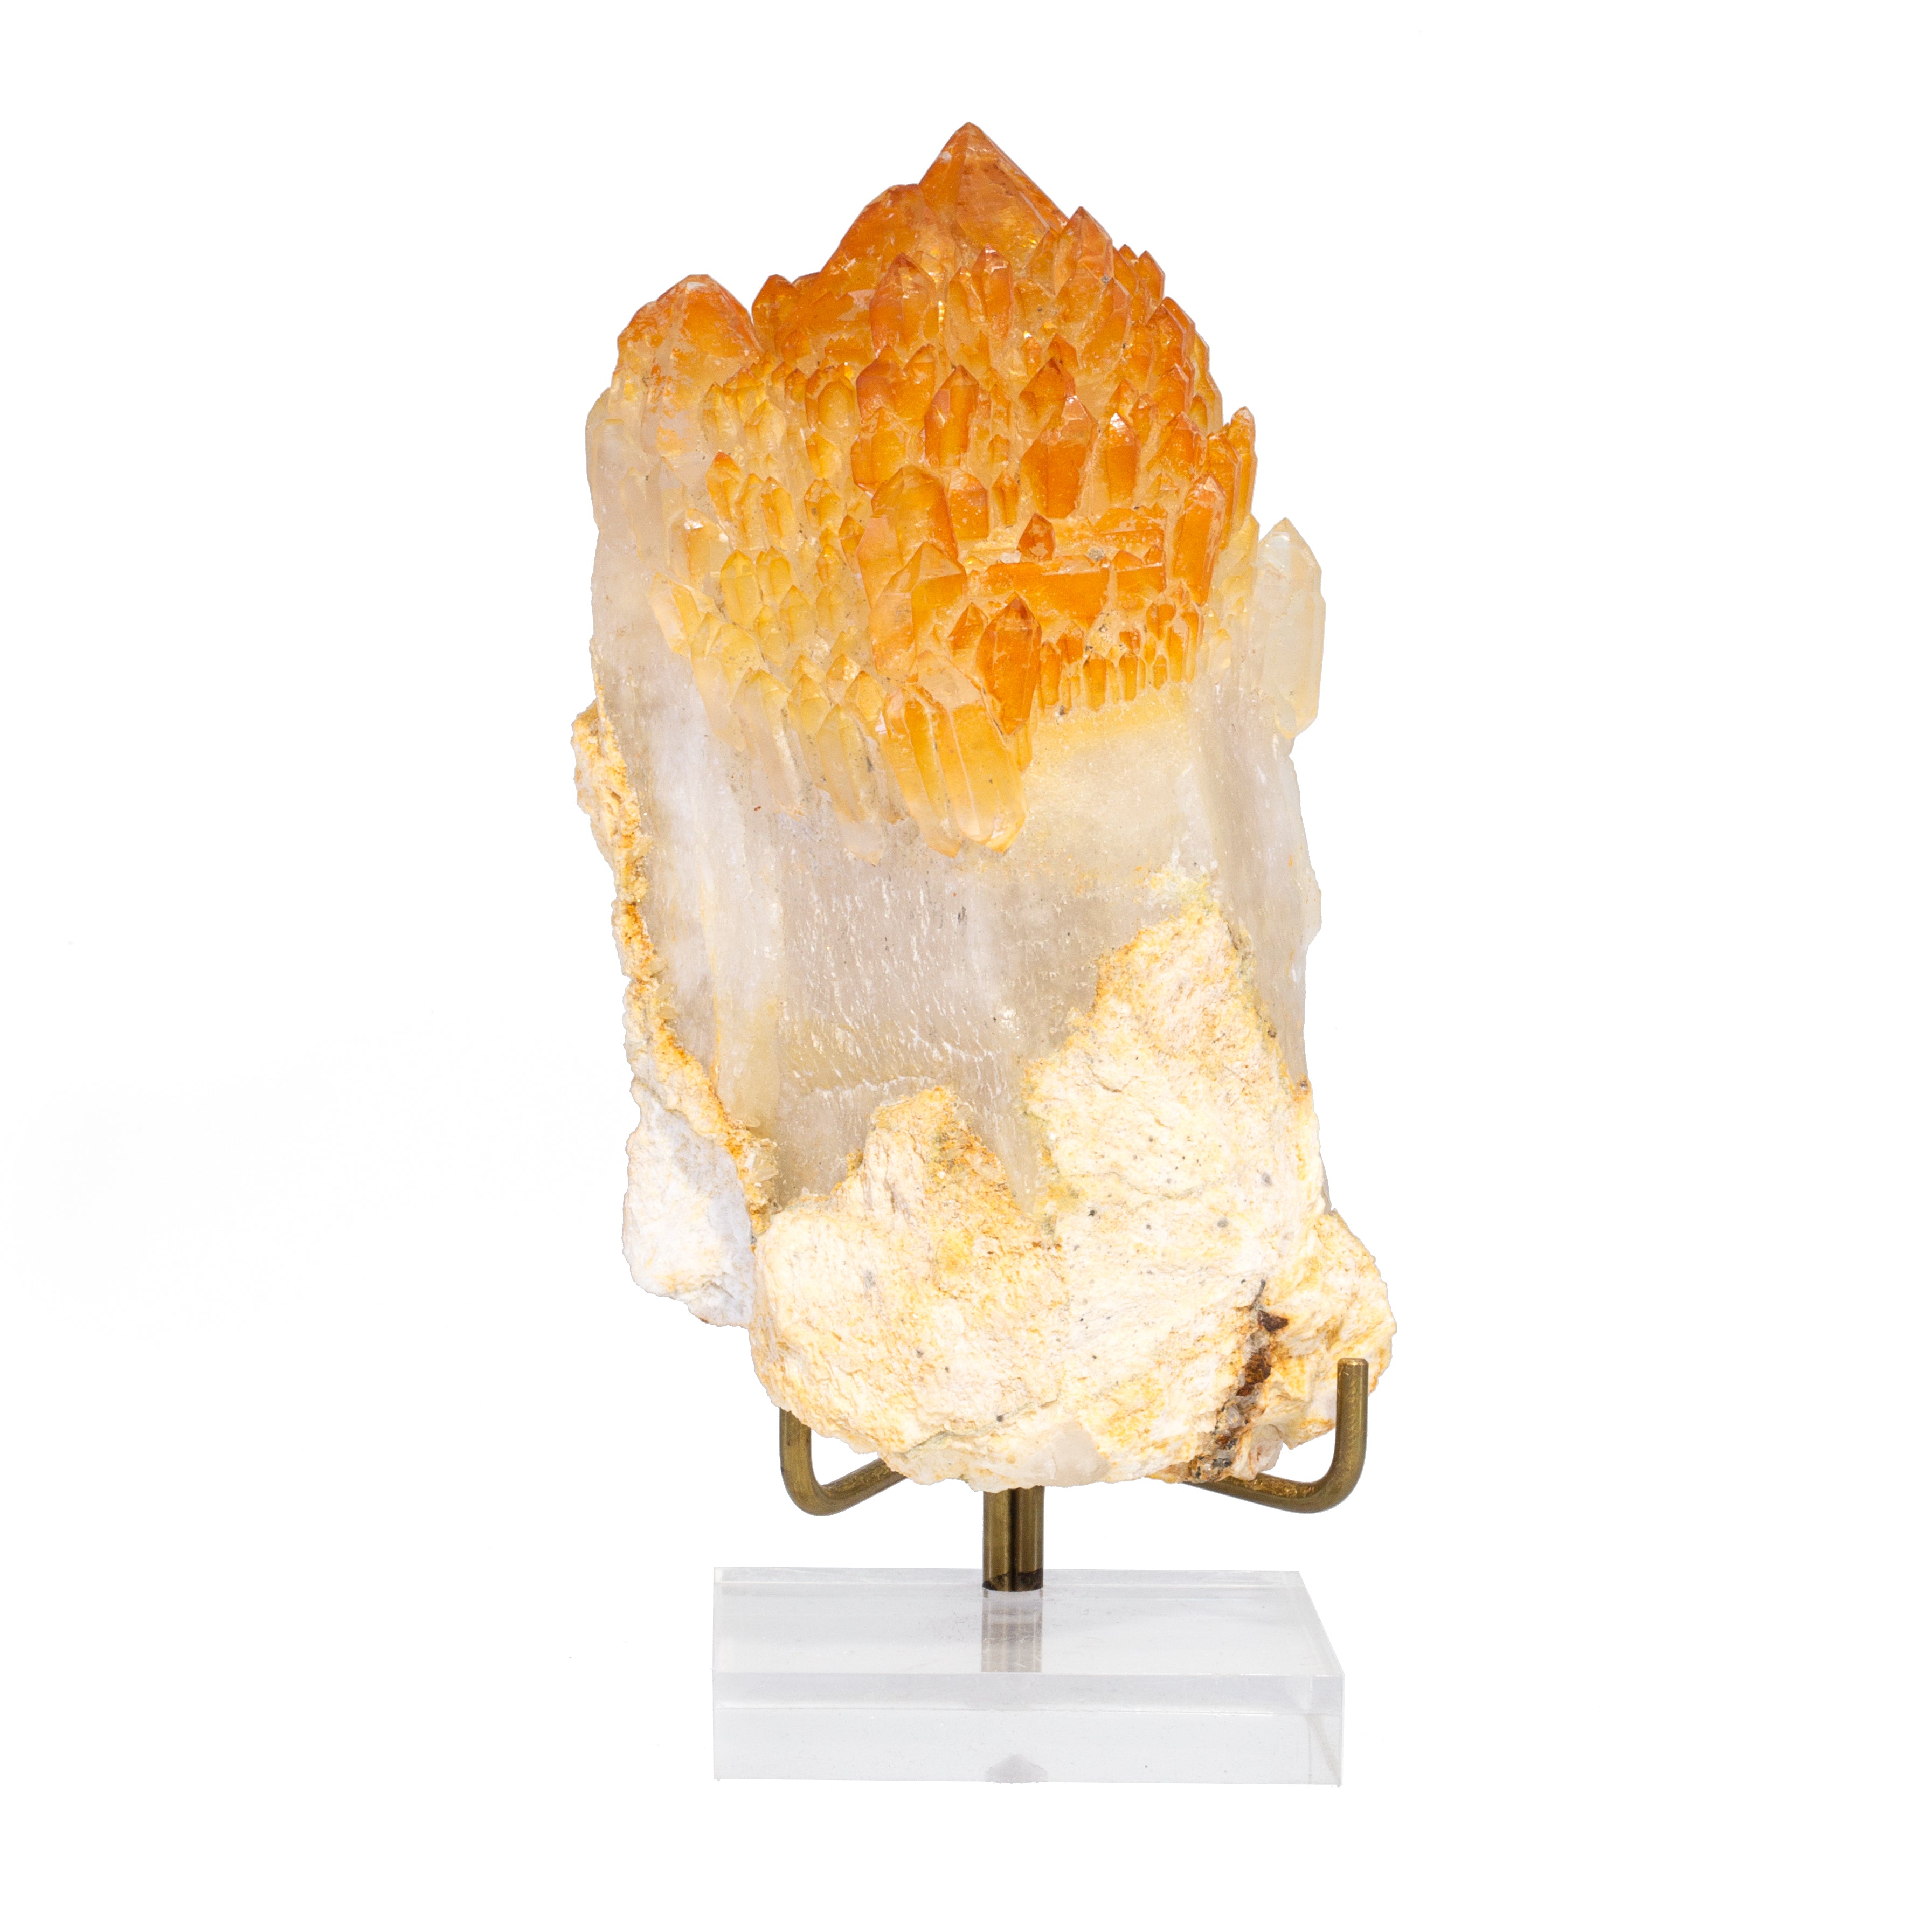 Pineapple Quartz 1.62lb Natural Crystal Specimen - Pakistan - JJX-464 - Crystalarium